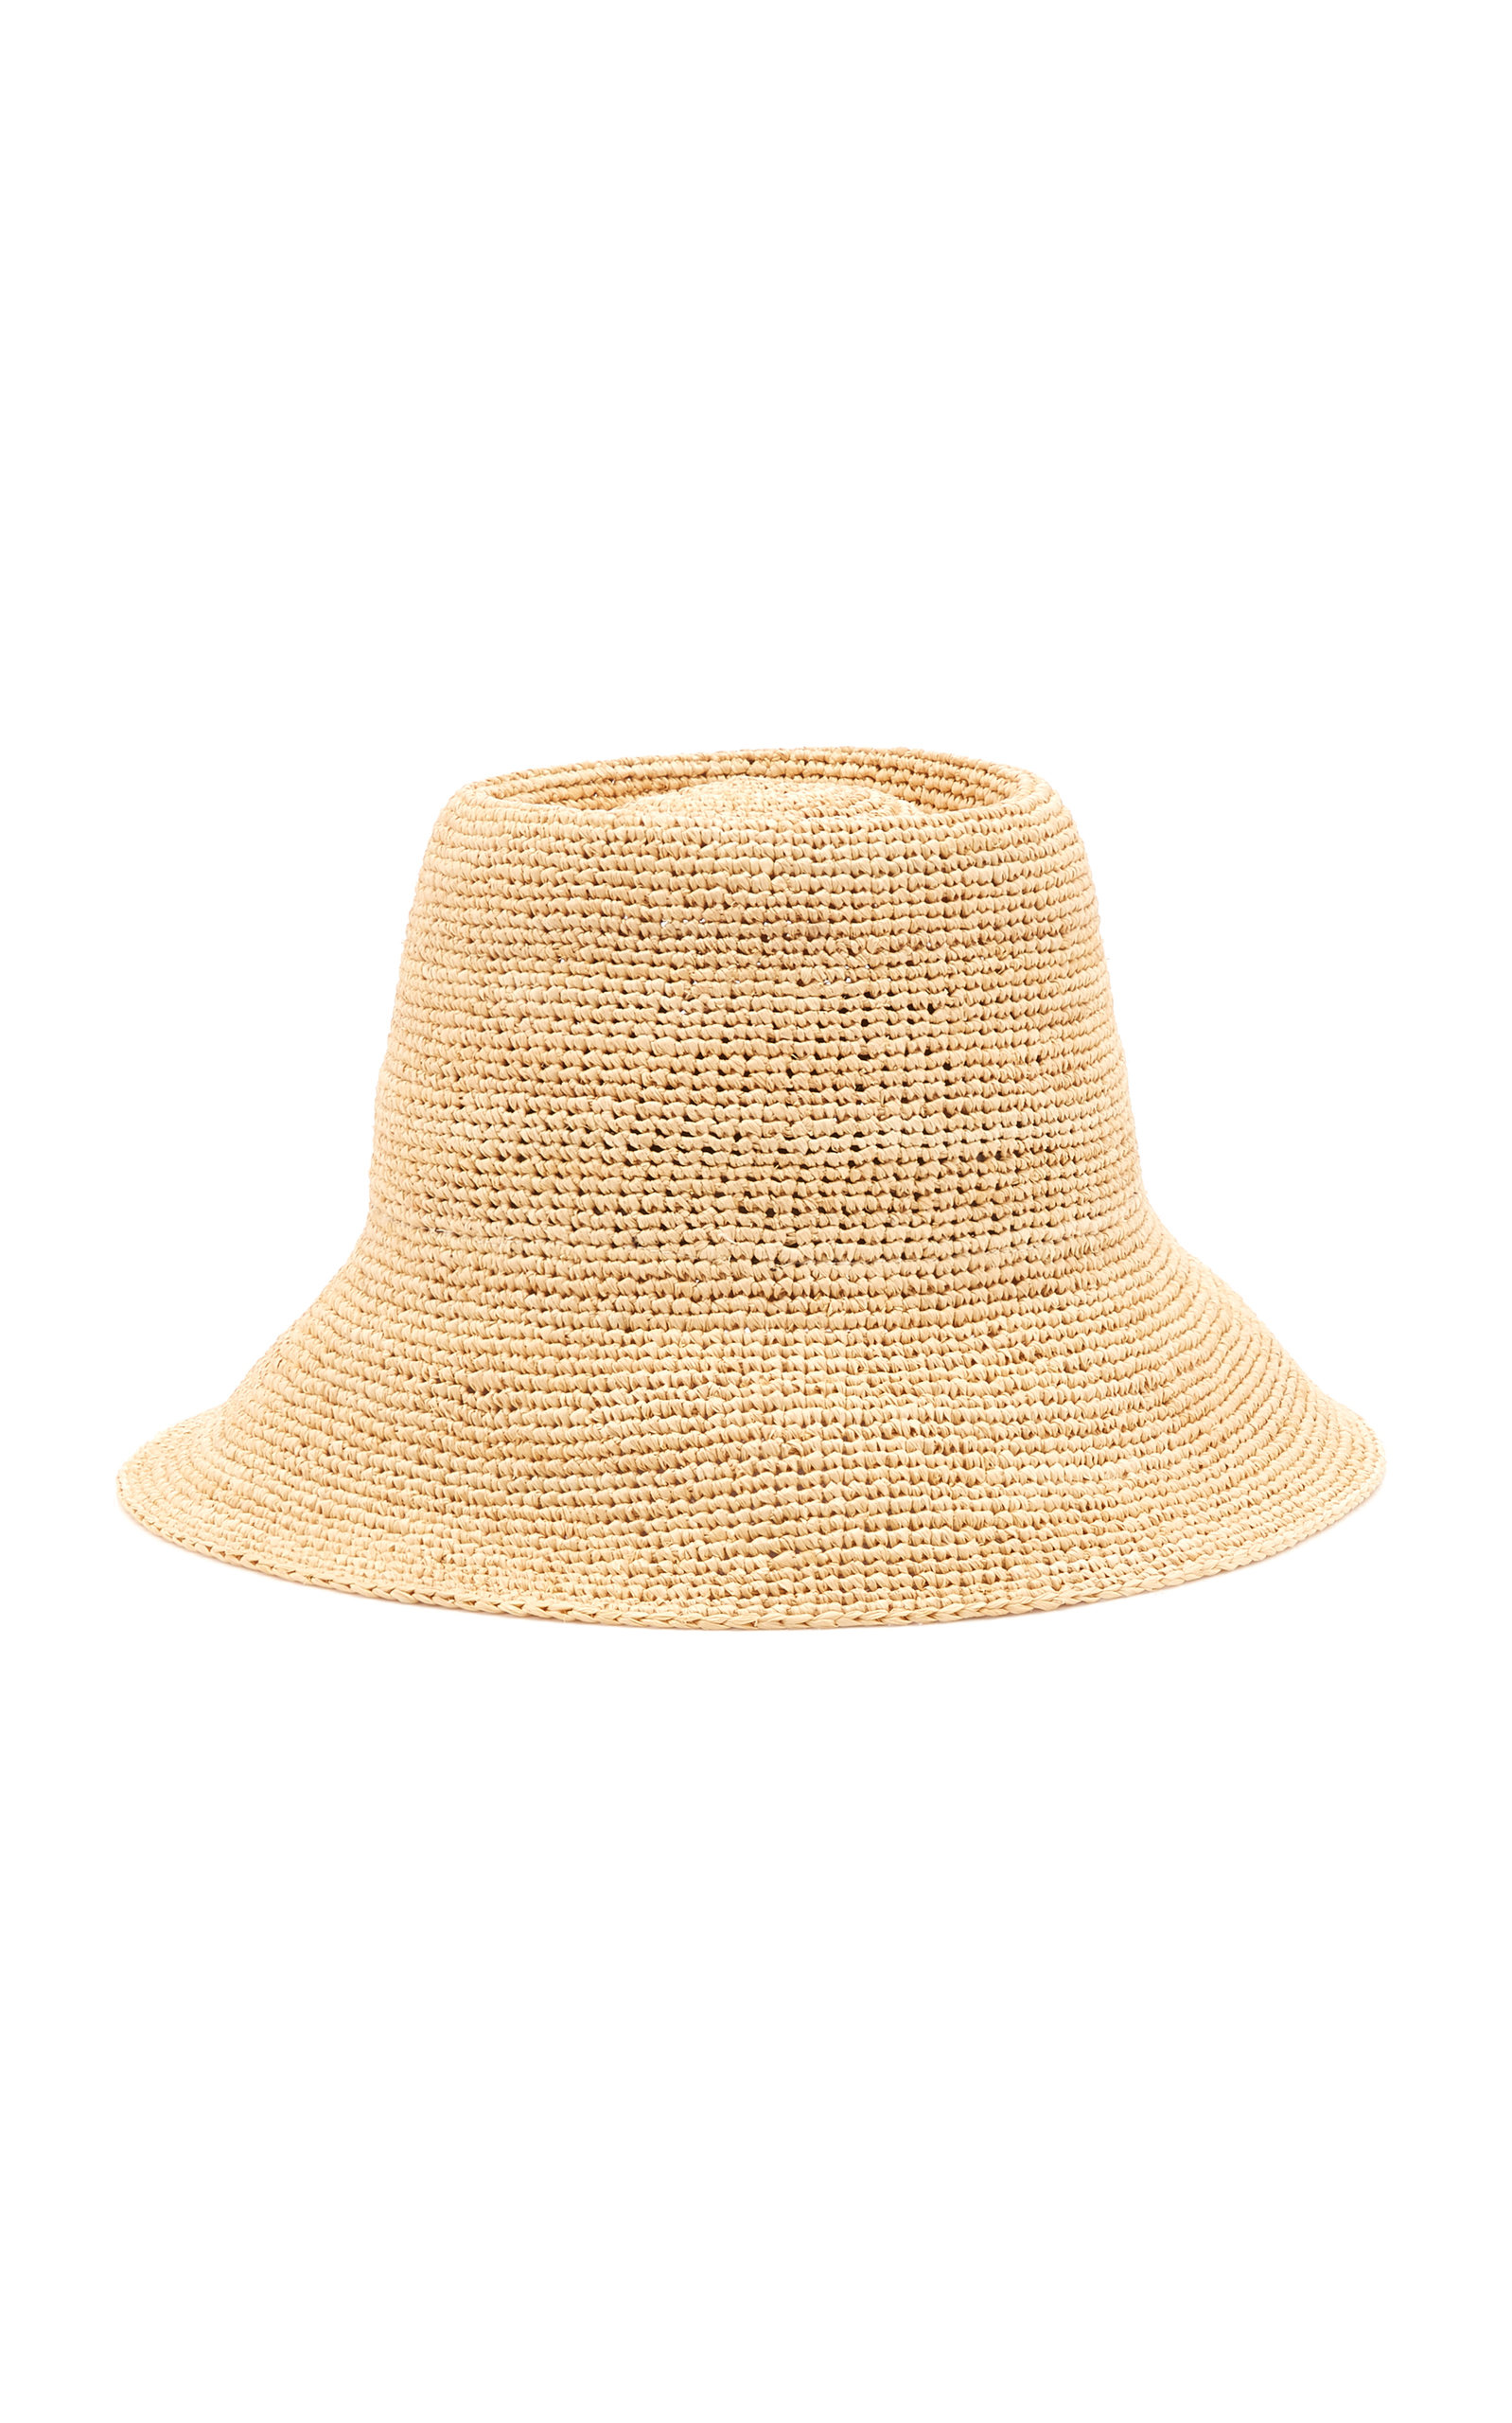 Janessa Leone Straw Baseball Cap - Neutrals Hats, Accessories